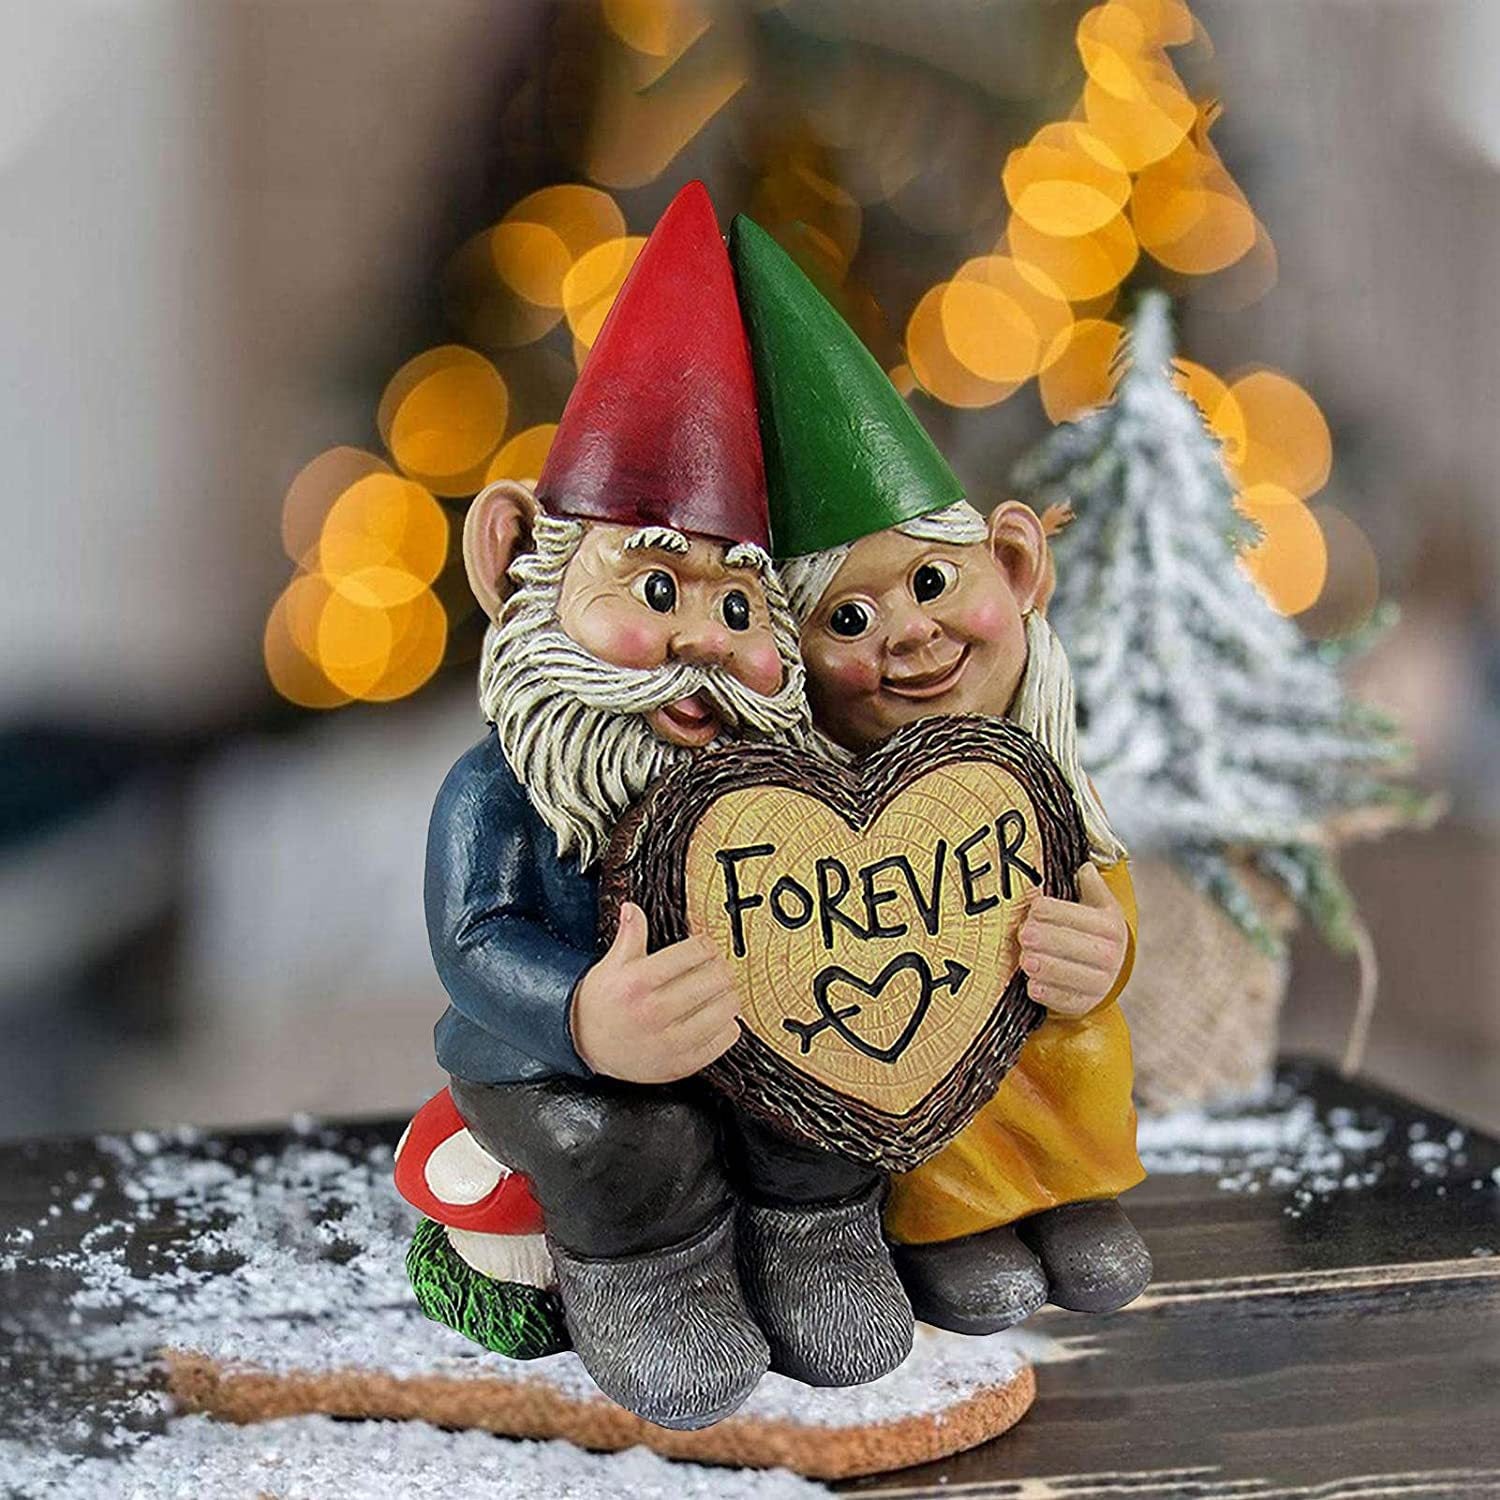 Garden Dwarf Couple Holding Love Statue Falling Resin Couple Dwarf Decorations Table Decorative Ornaments